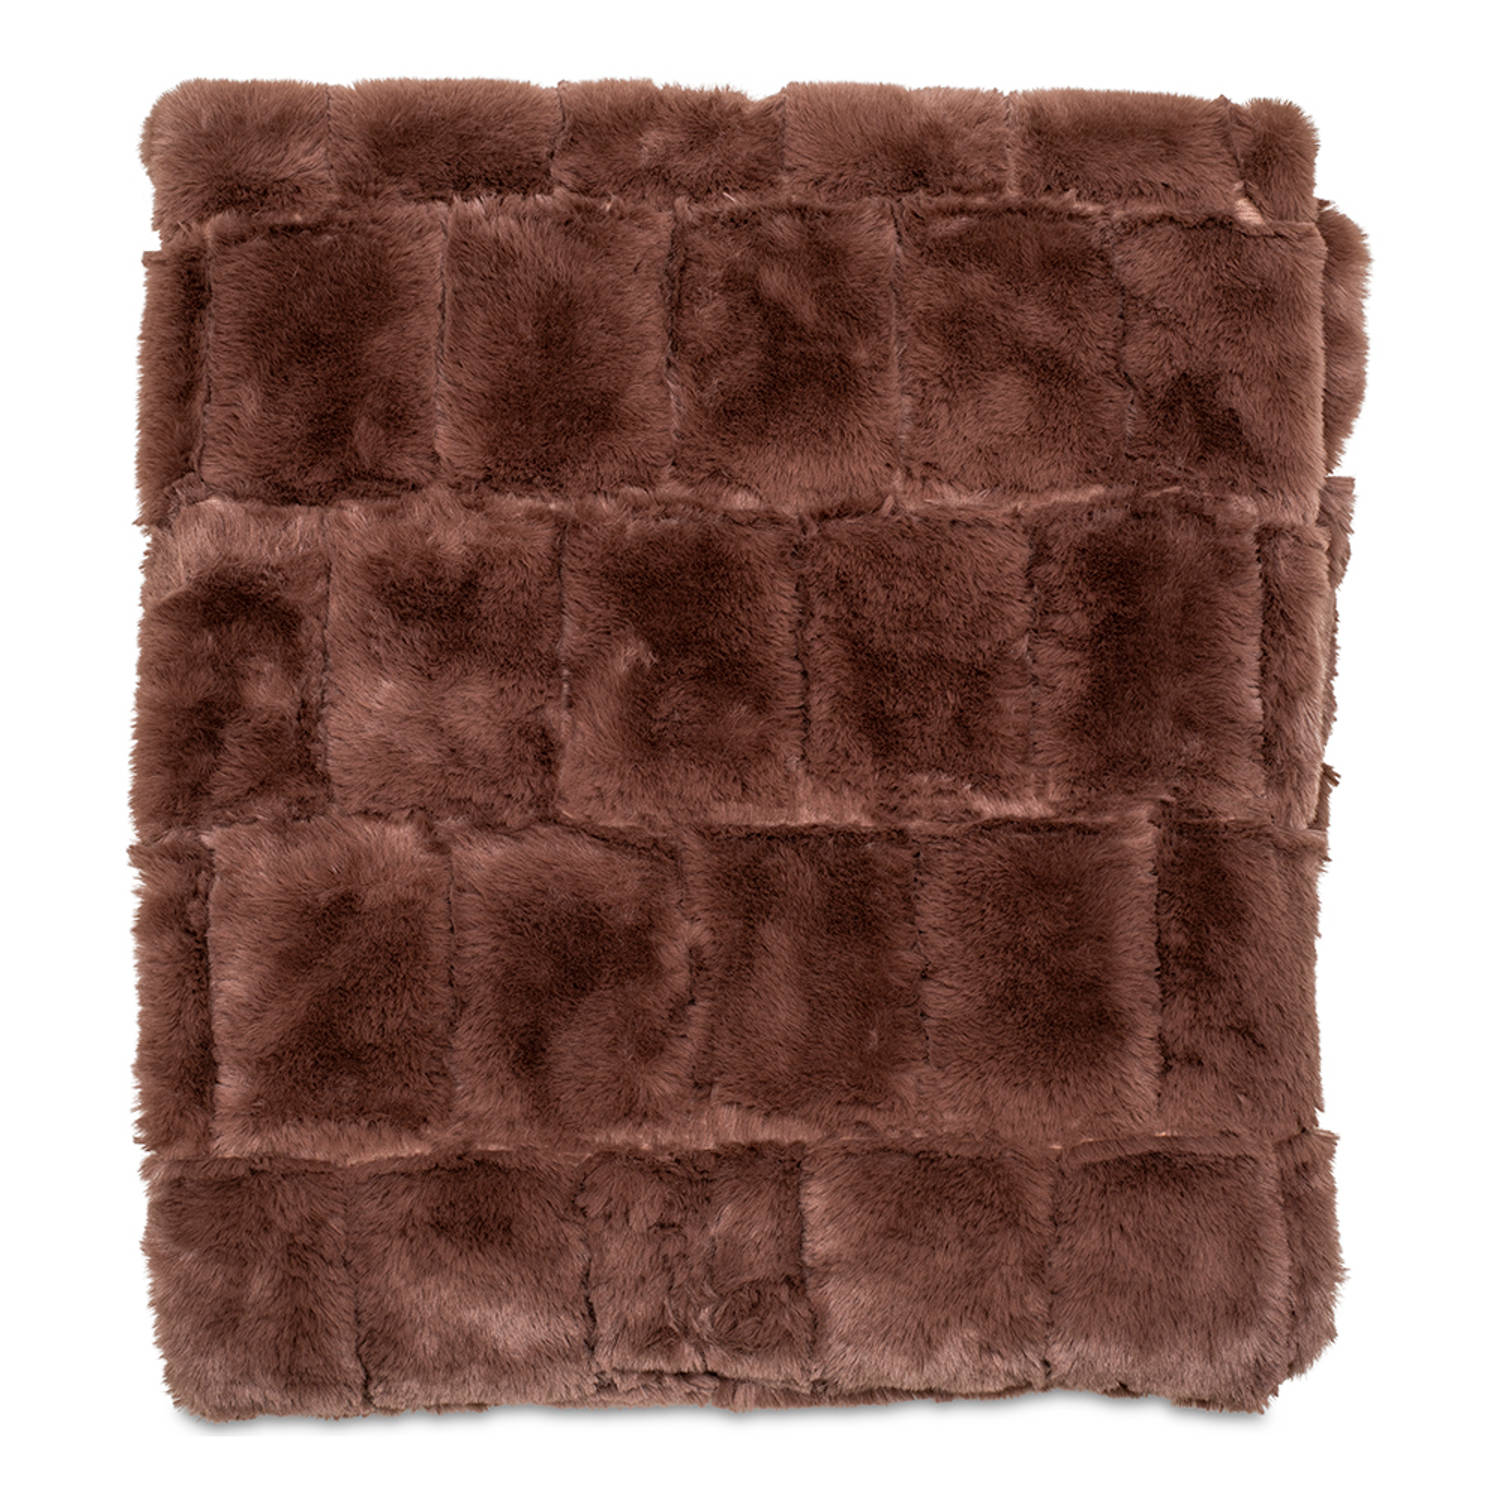 Wicotex-Plaid-deken-fleece plaid jacquard Cube taupe 150x200cm polyester-Zacht en warme Fleece deken.